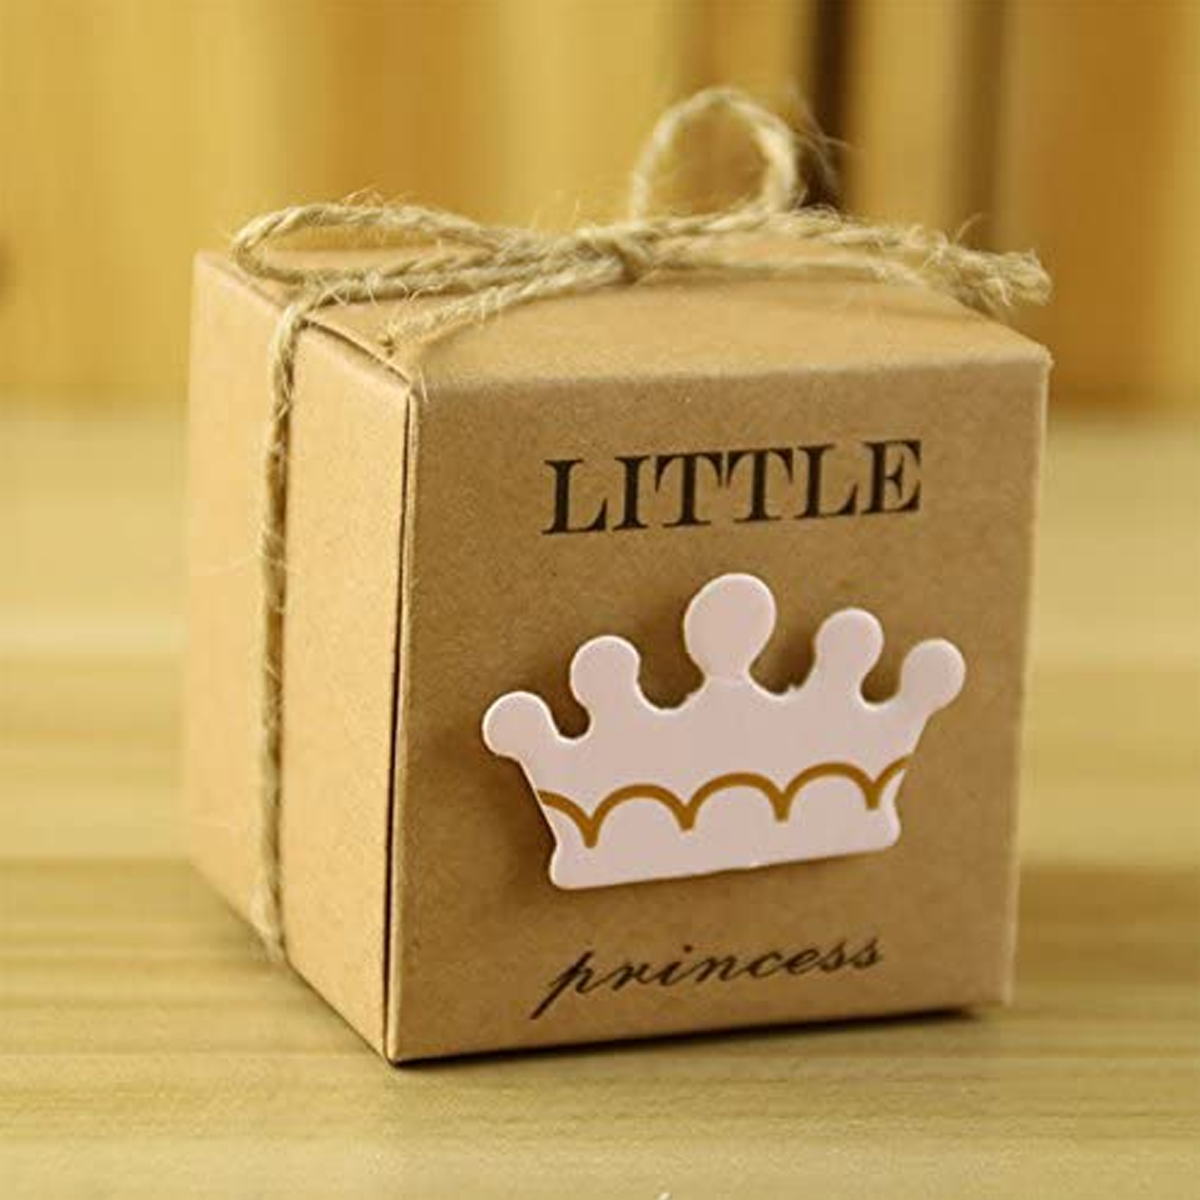 50pcs Baby Shower Candy Box Little Prince/Princess Kraft Boxes